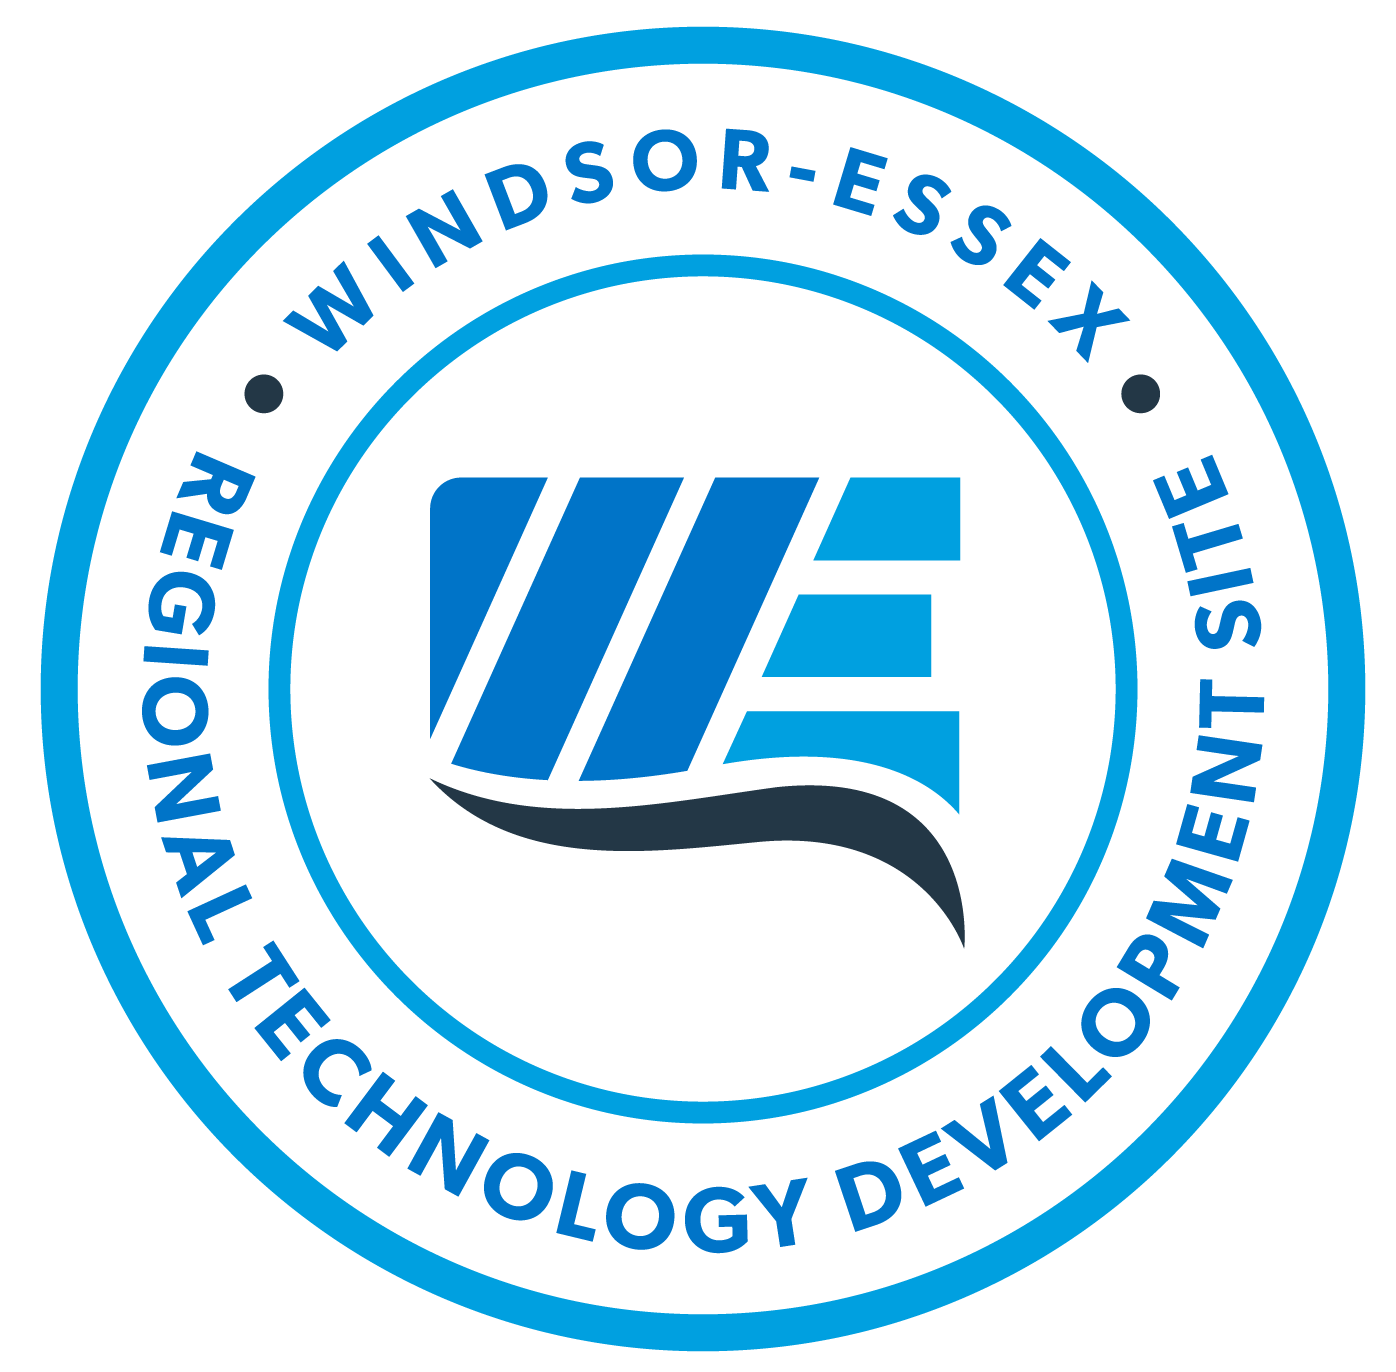 Windsor-Essex Regional Technology Development logo